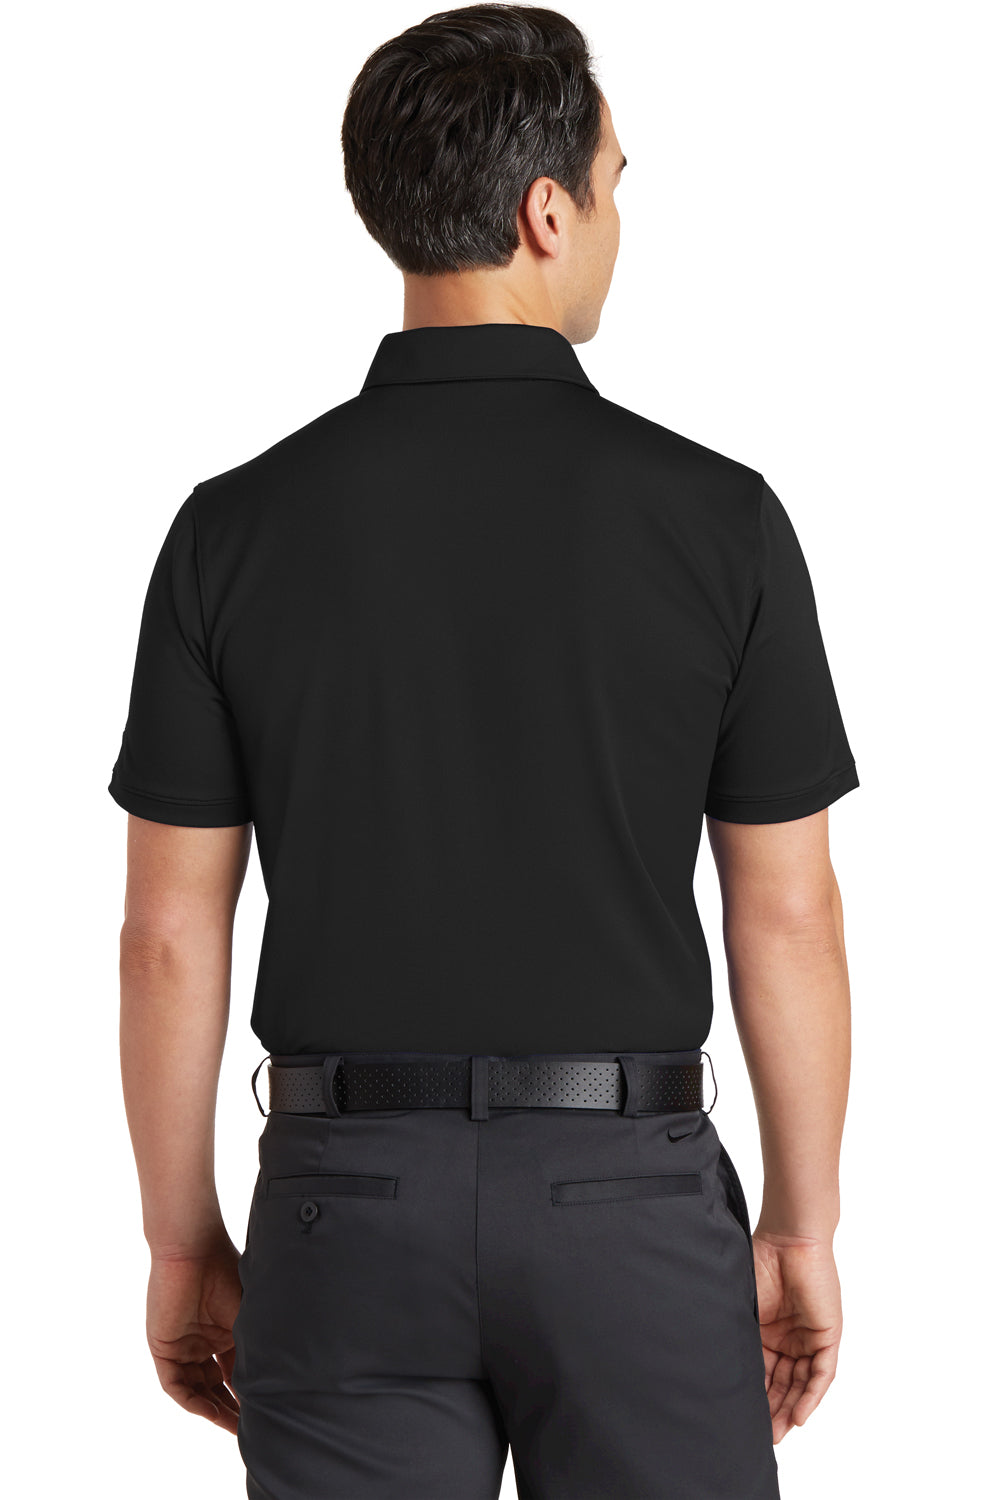 Nike 746099 Mens Icon Dri-Fit Moisture Wicking Short Sleeve Polo Shirt Black Model Back